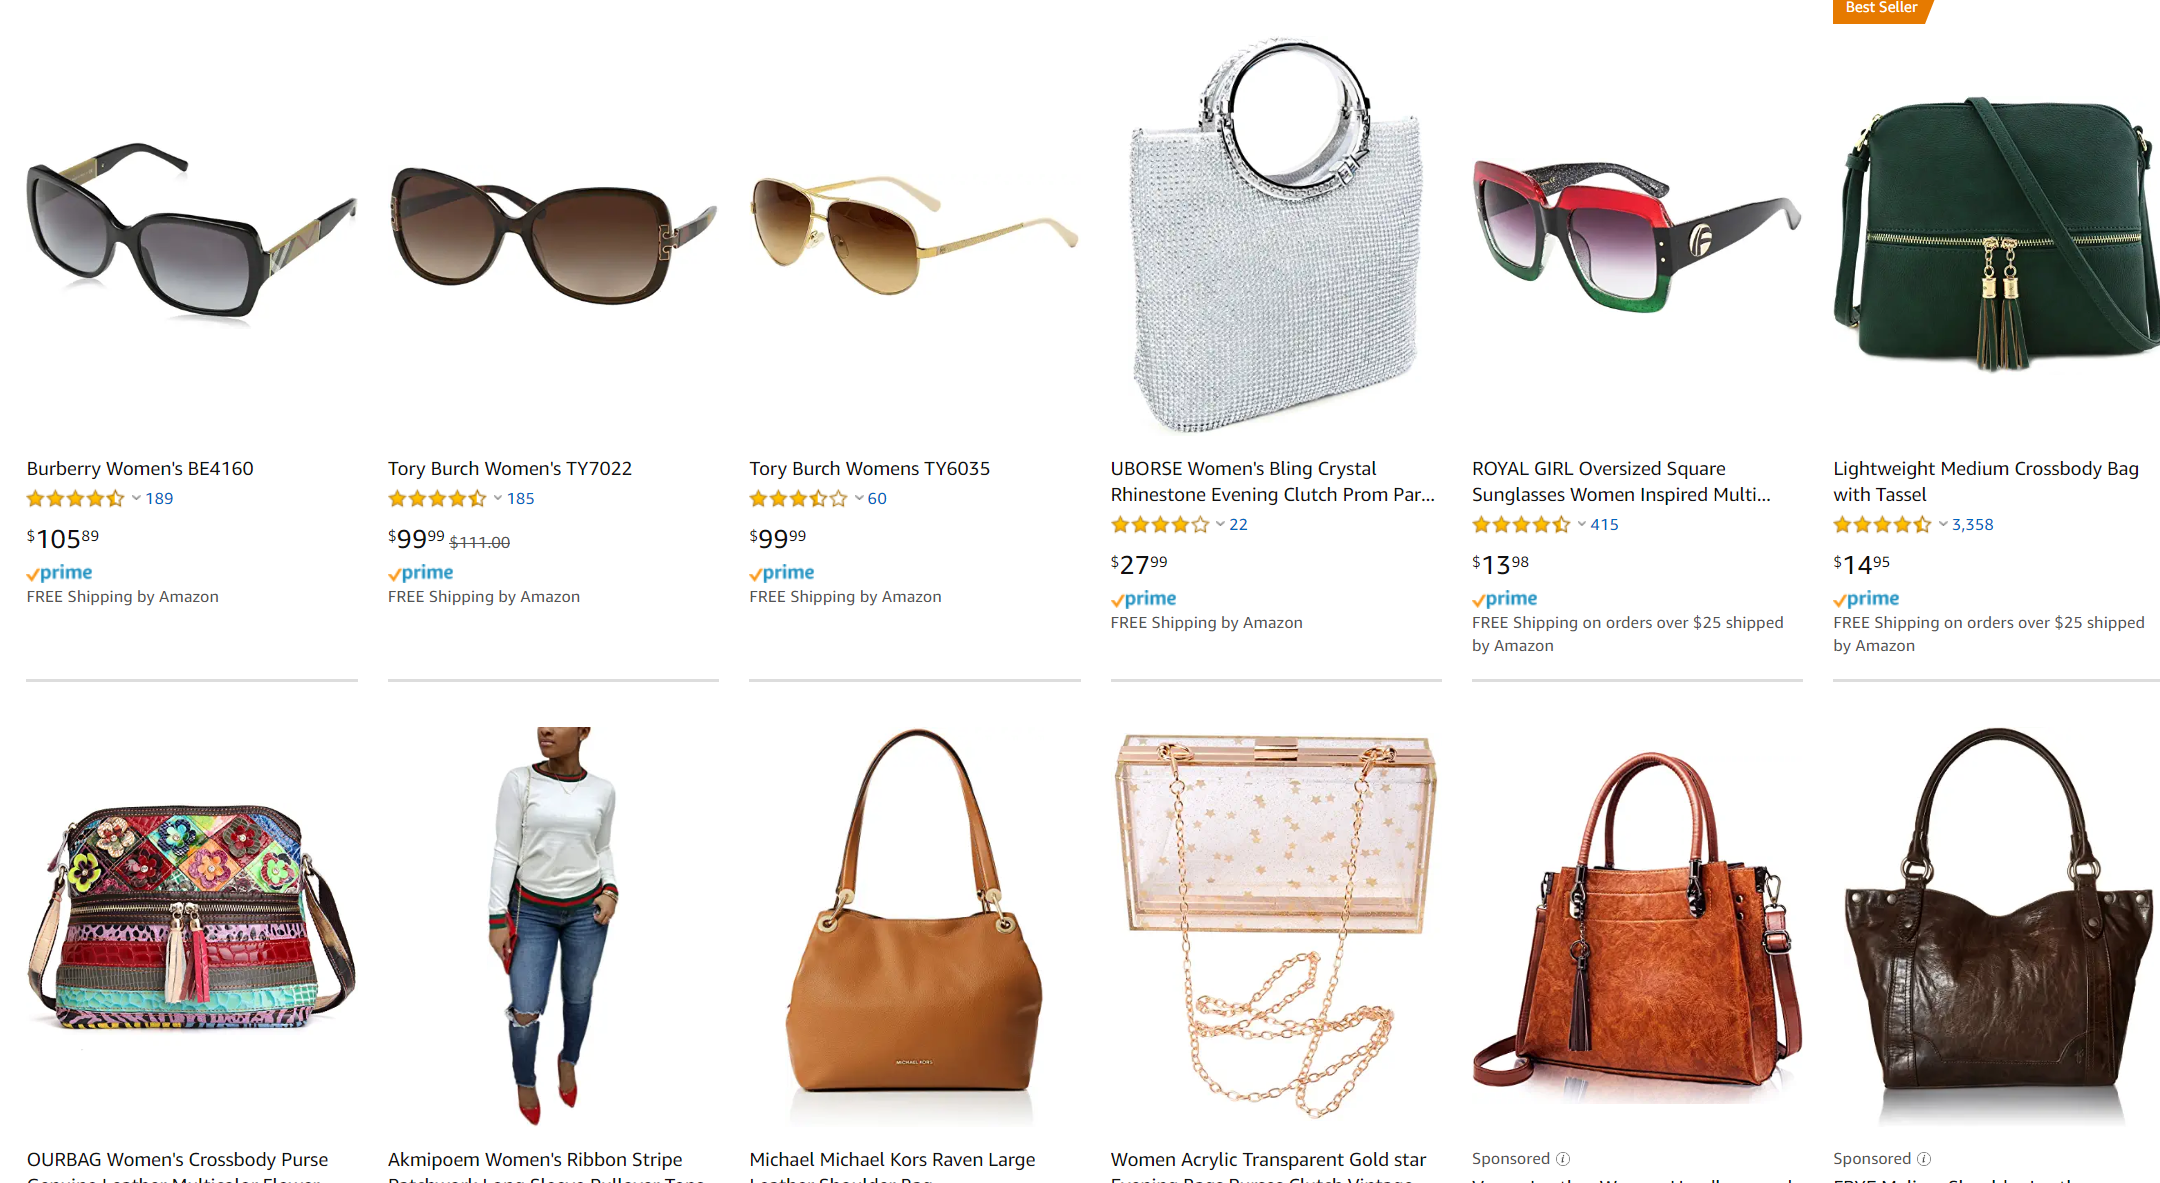 shoes, handbags, and sunglasses